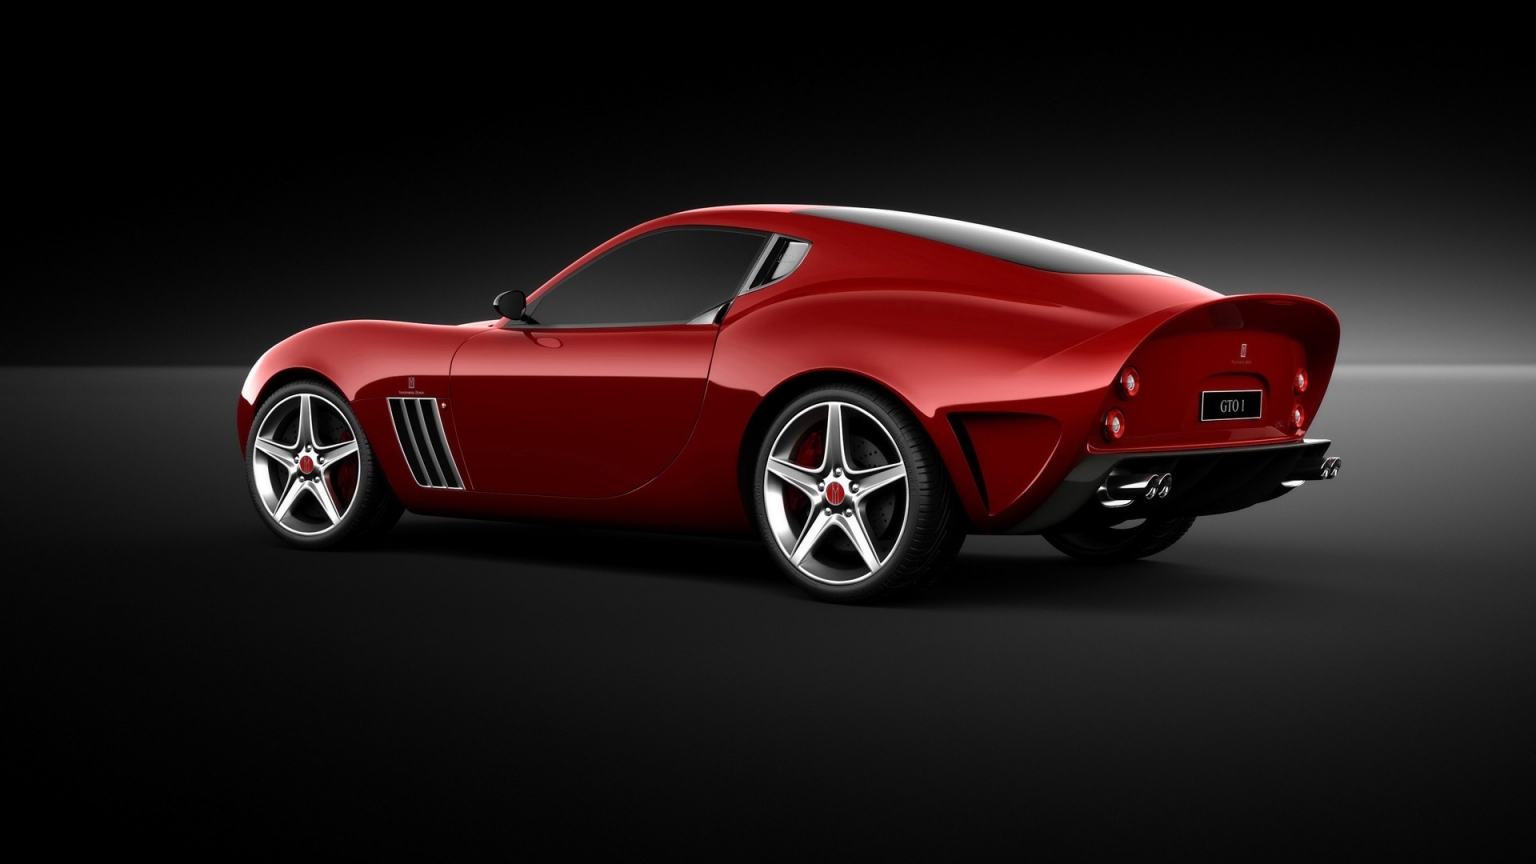 Ferrari Vandenbrink 599 GTO 2009 for 1536 x 864 HDTV resolution